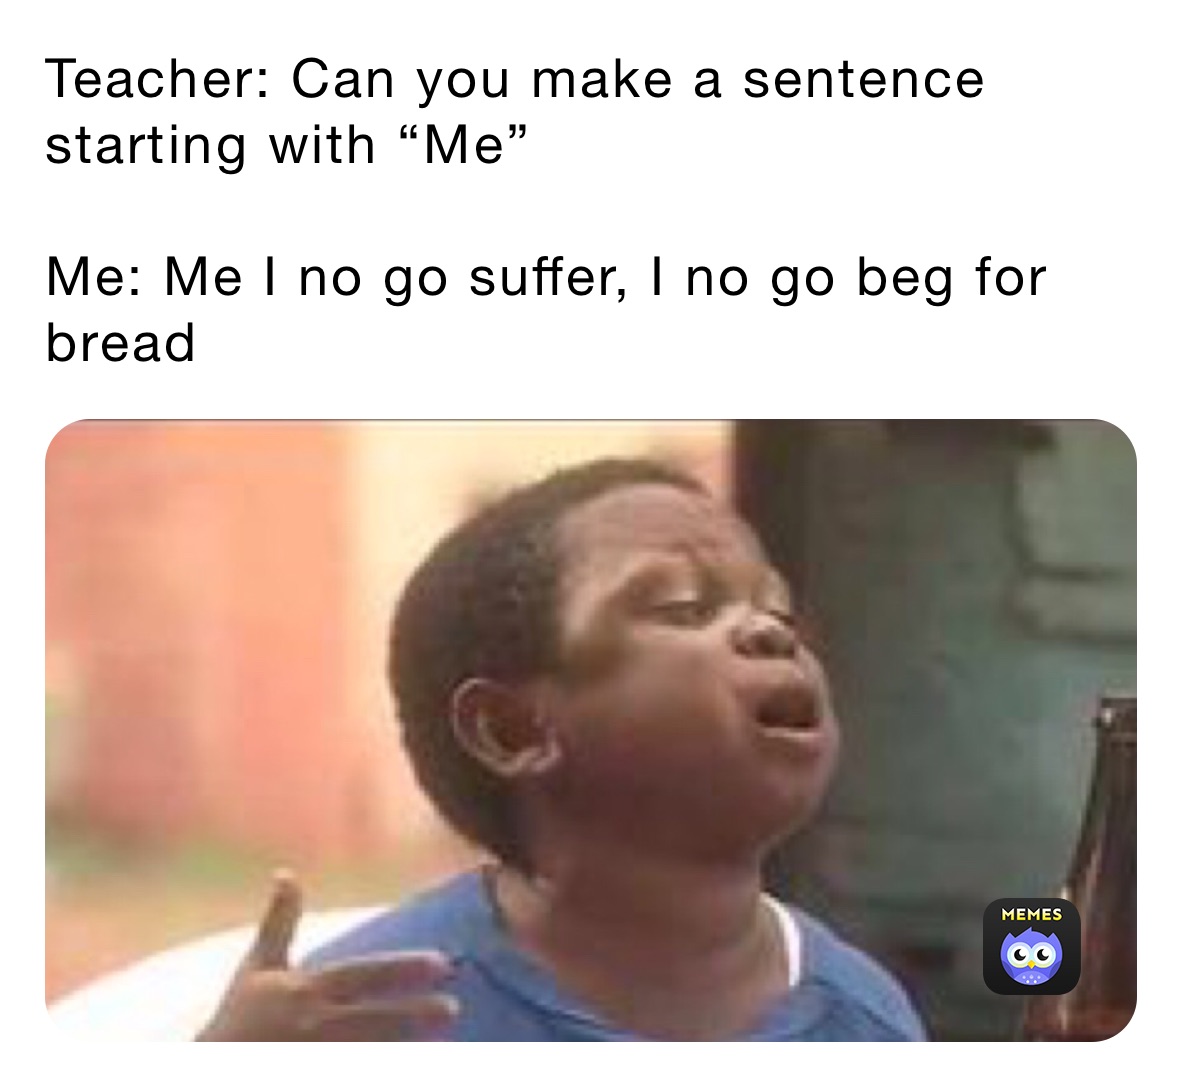 Teacher: Can you make a sentence starting with “Me”

Me: Me I no go suffer, I no go beg for bread